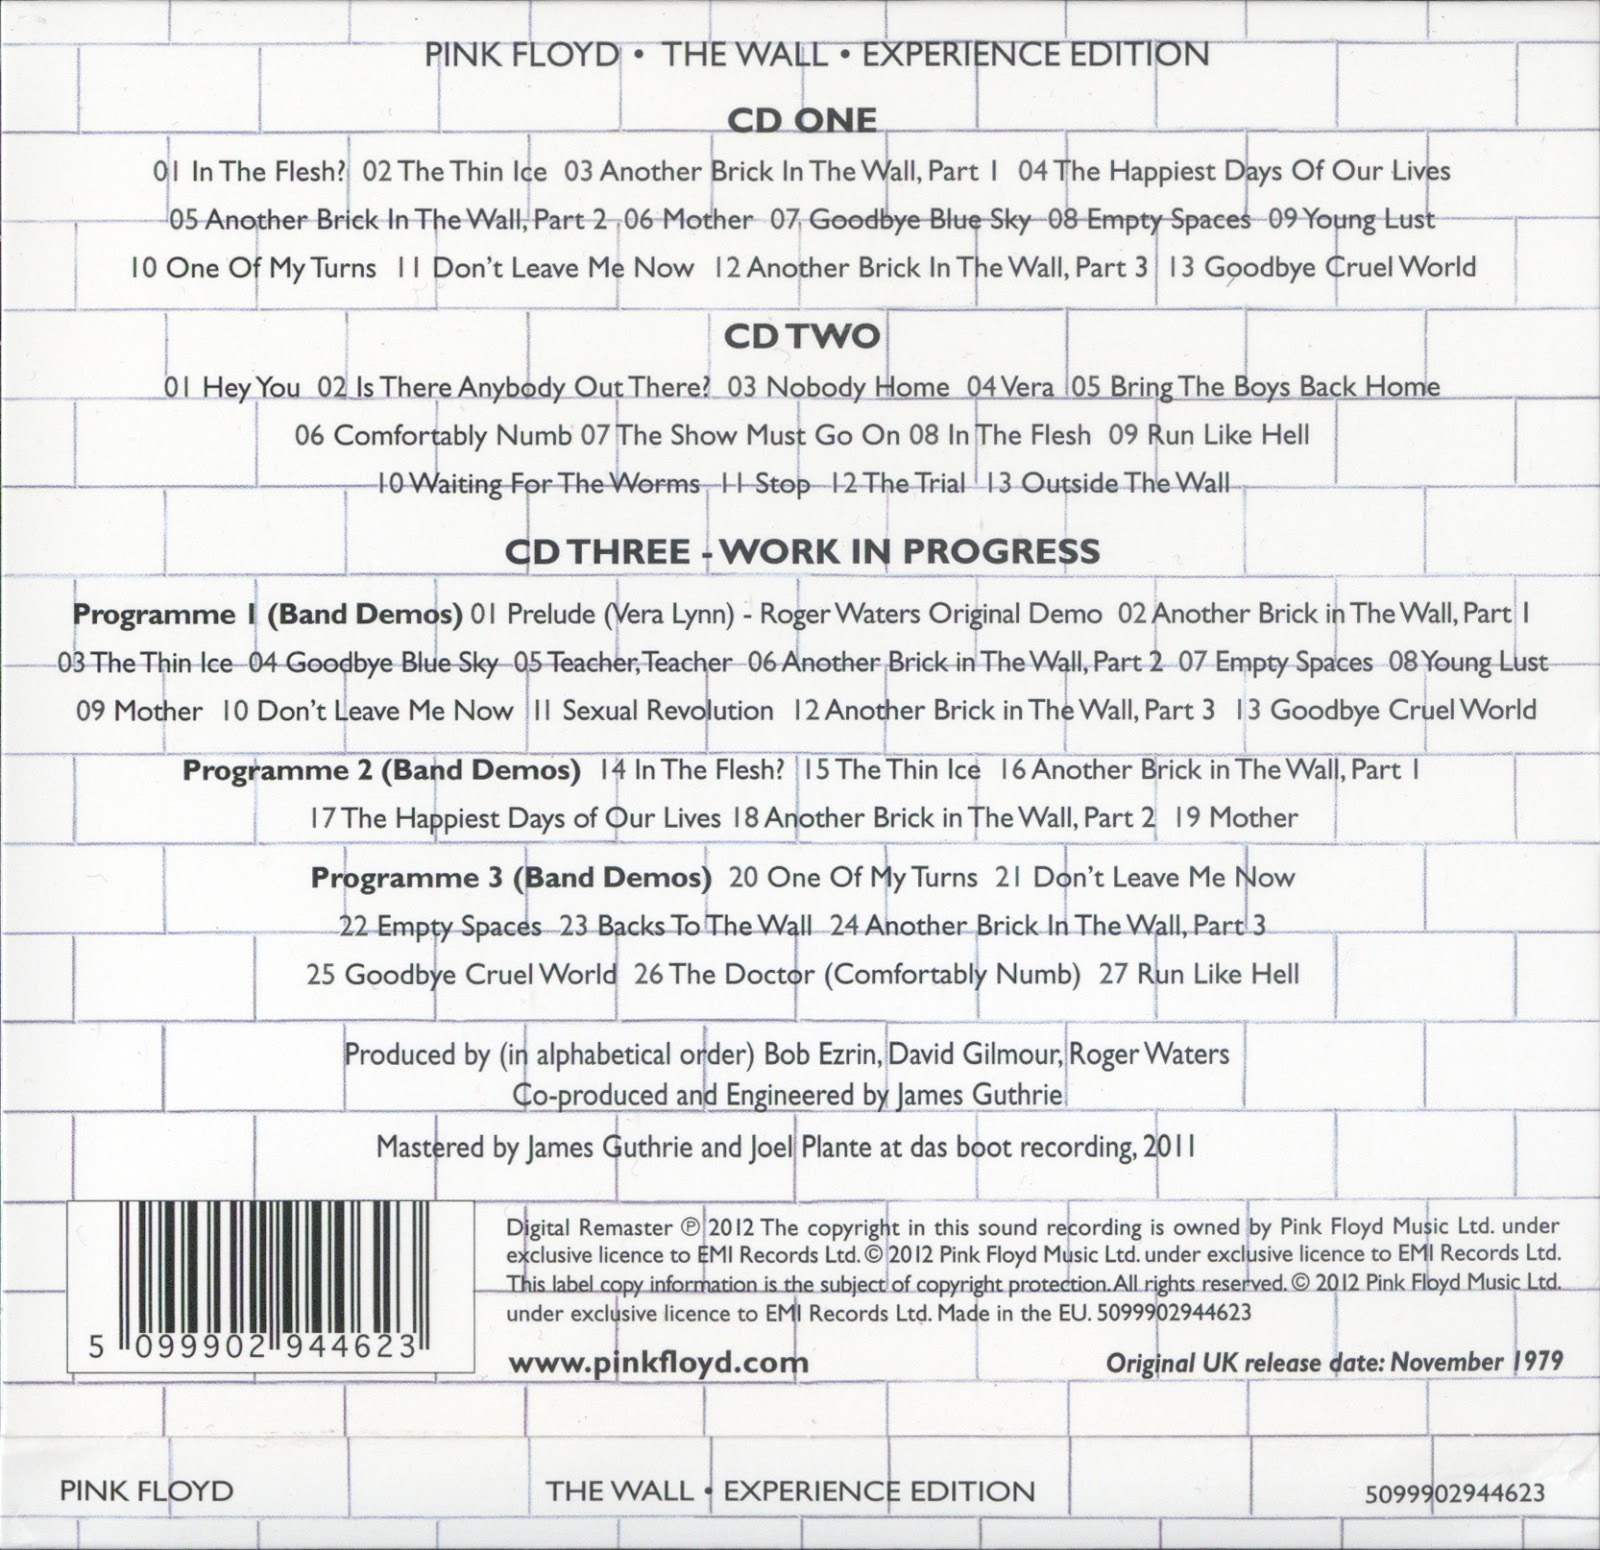 Стен перевод песни. The Wall Треклист. Пинк Флойд the Trial. Pink Floyd the Wall Треклист. Дэвид Гилмор comfortably Numb.